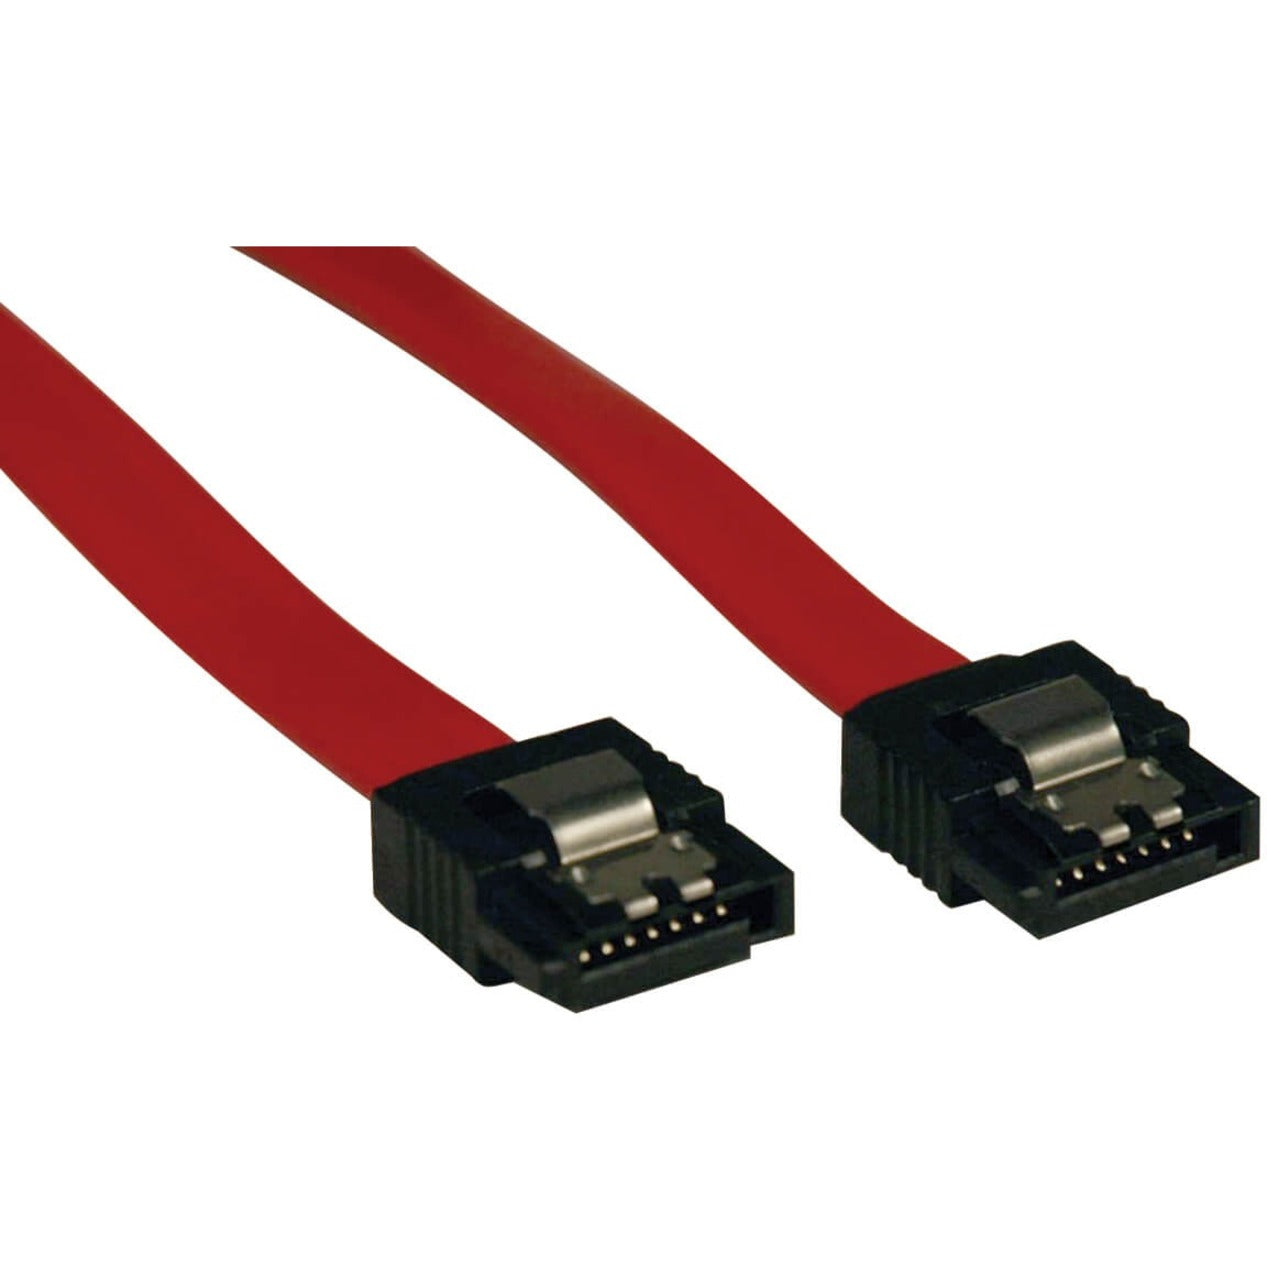 Tripp Lite: トリップライト P940-19I: P940-19I Serial ATA: シリアルATA Cable: ケーブル 19-in.: 19インチ Signal Cable: シグナルケーブル 7Pin/7Pin: 7ピン/7ピン